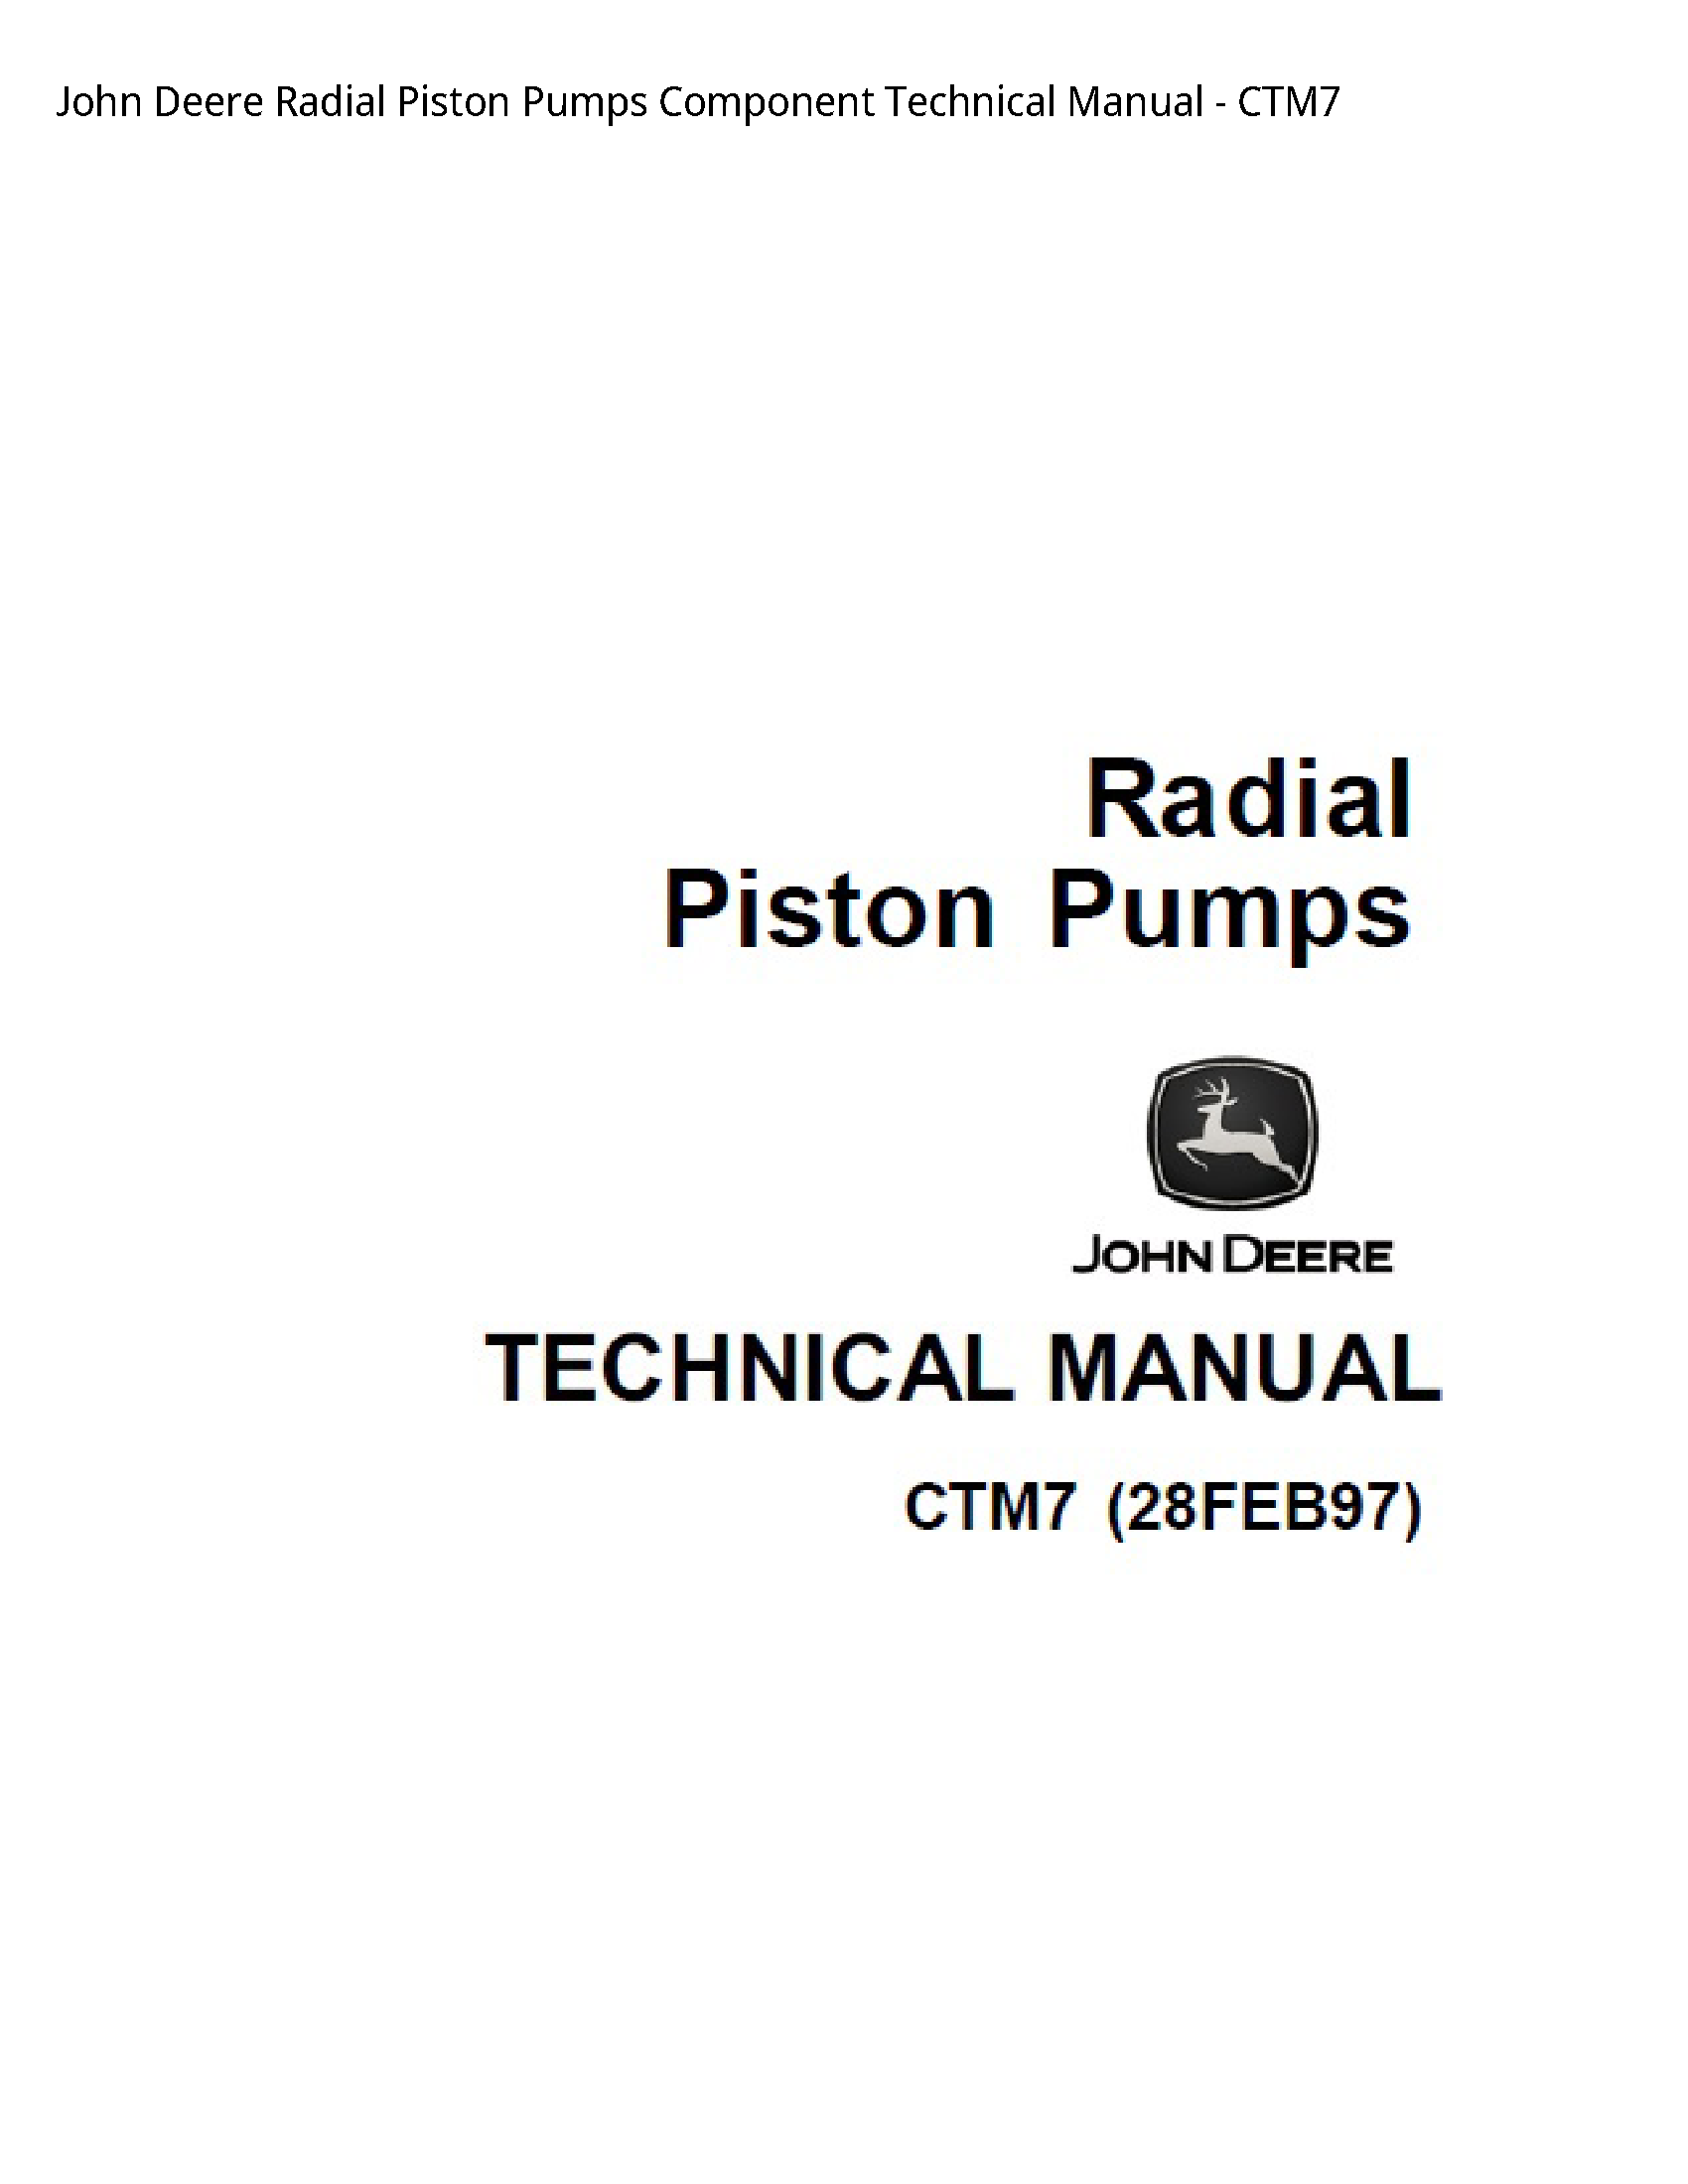 John Deere Radial Piston Pumps Component Technical manual